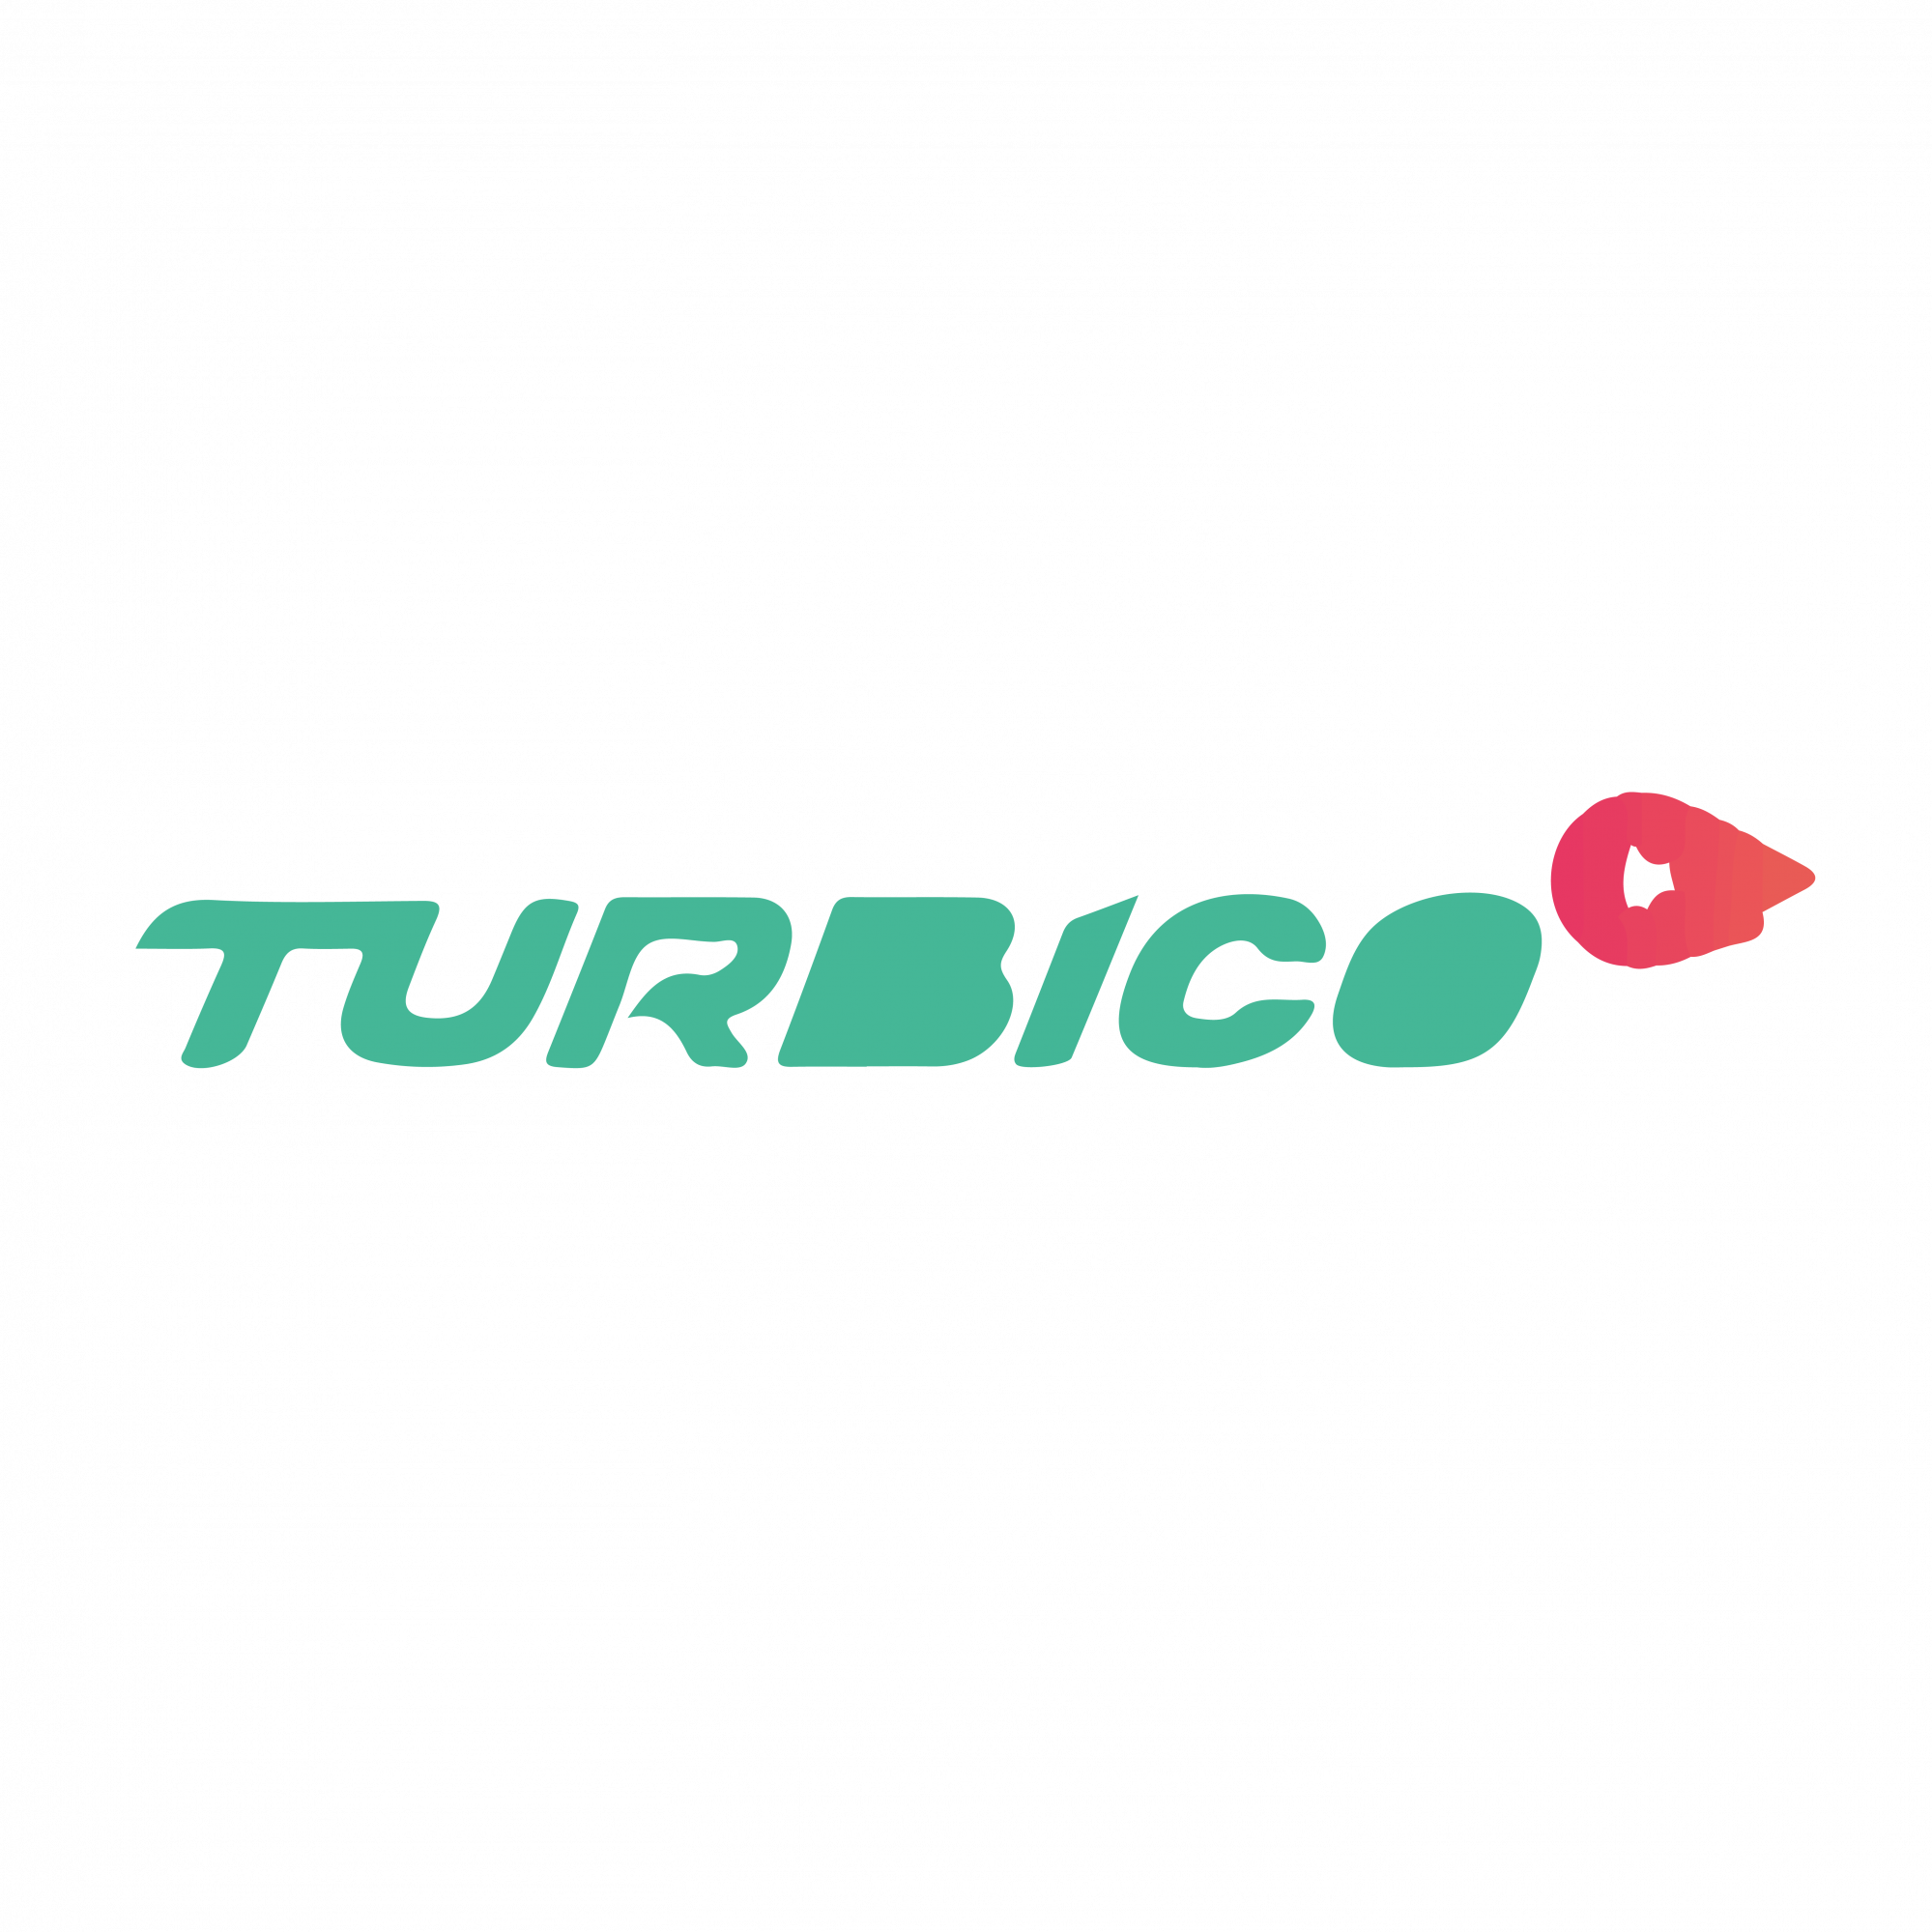 Turbico